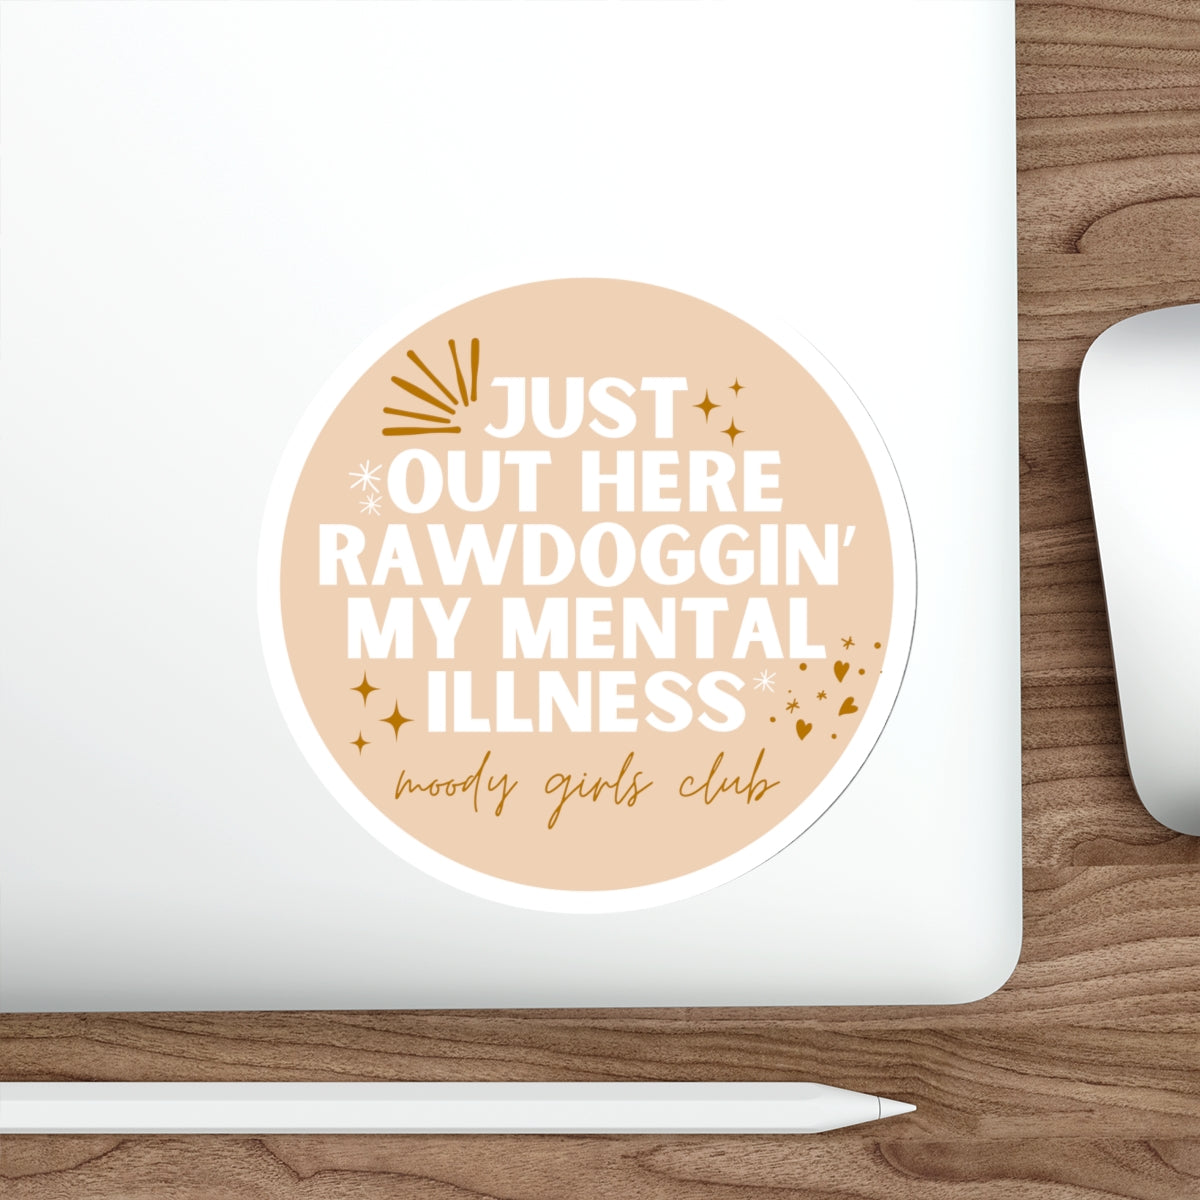 Rawdoggin' Stickers